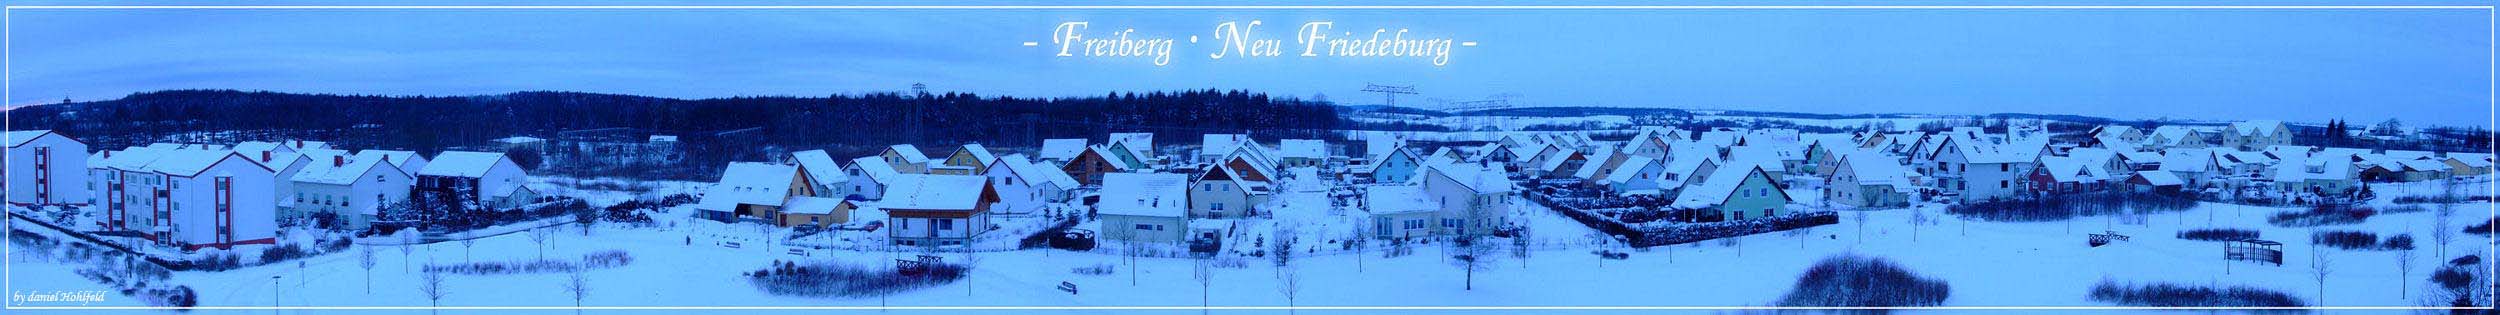 Blaue Stunde in Freiberg